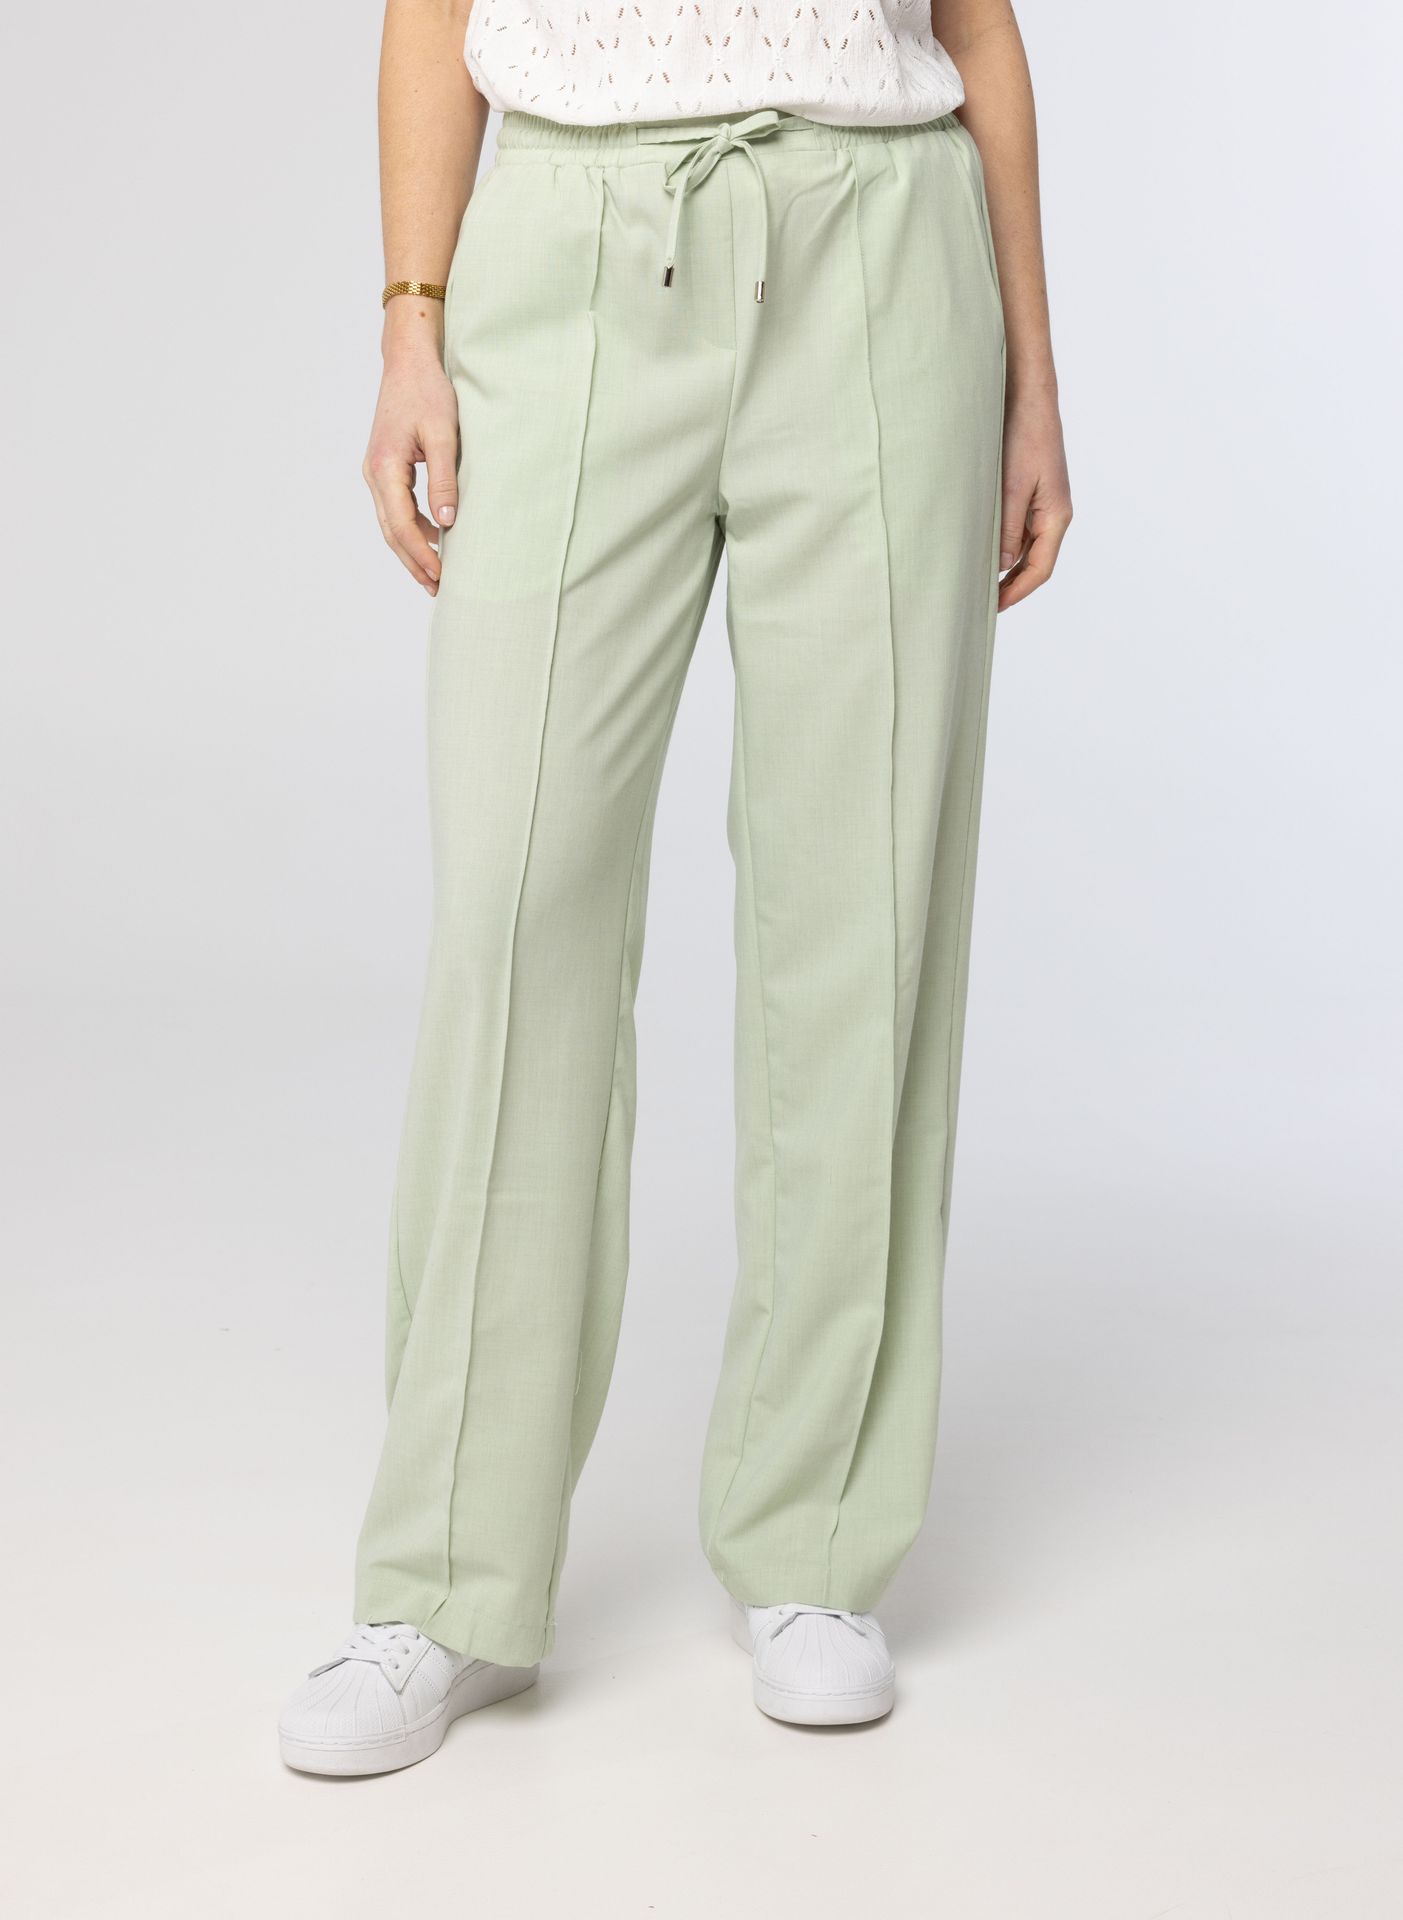 Norah Lichtgroene pantalon green 214391-500